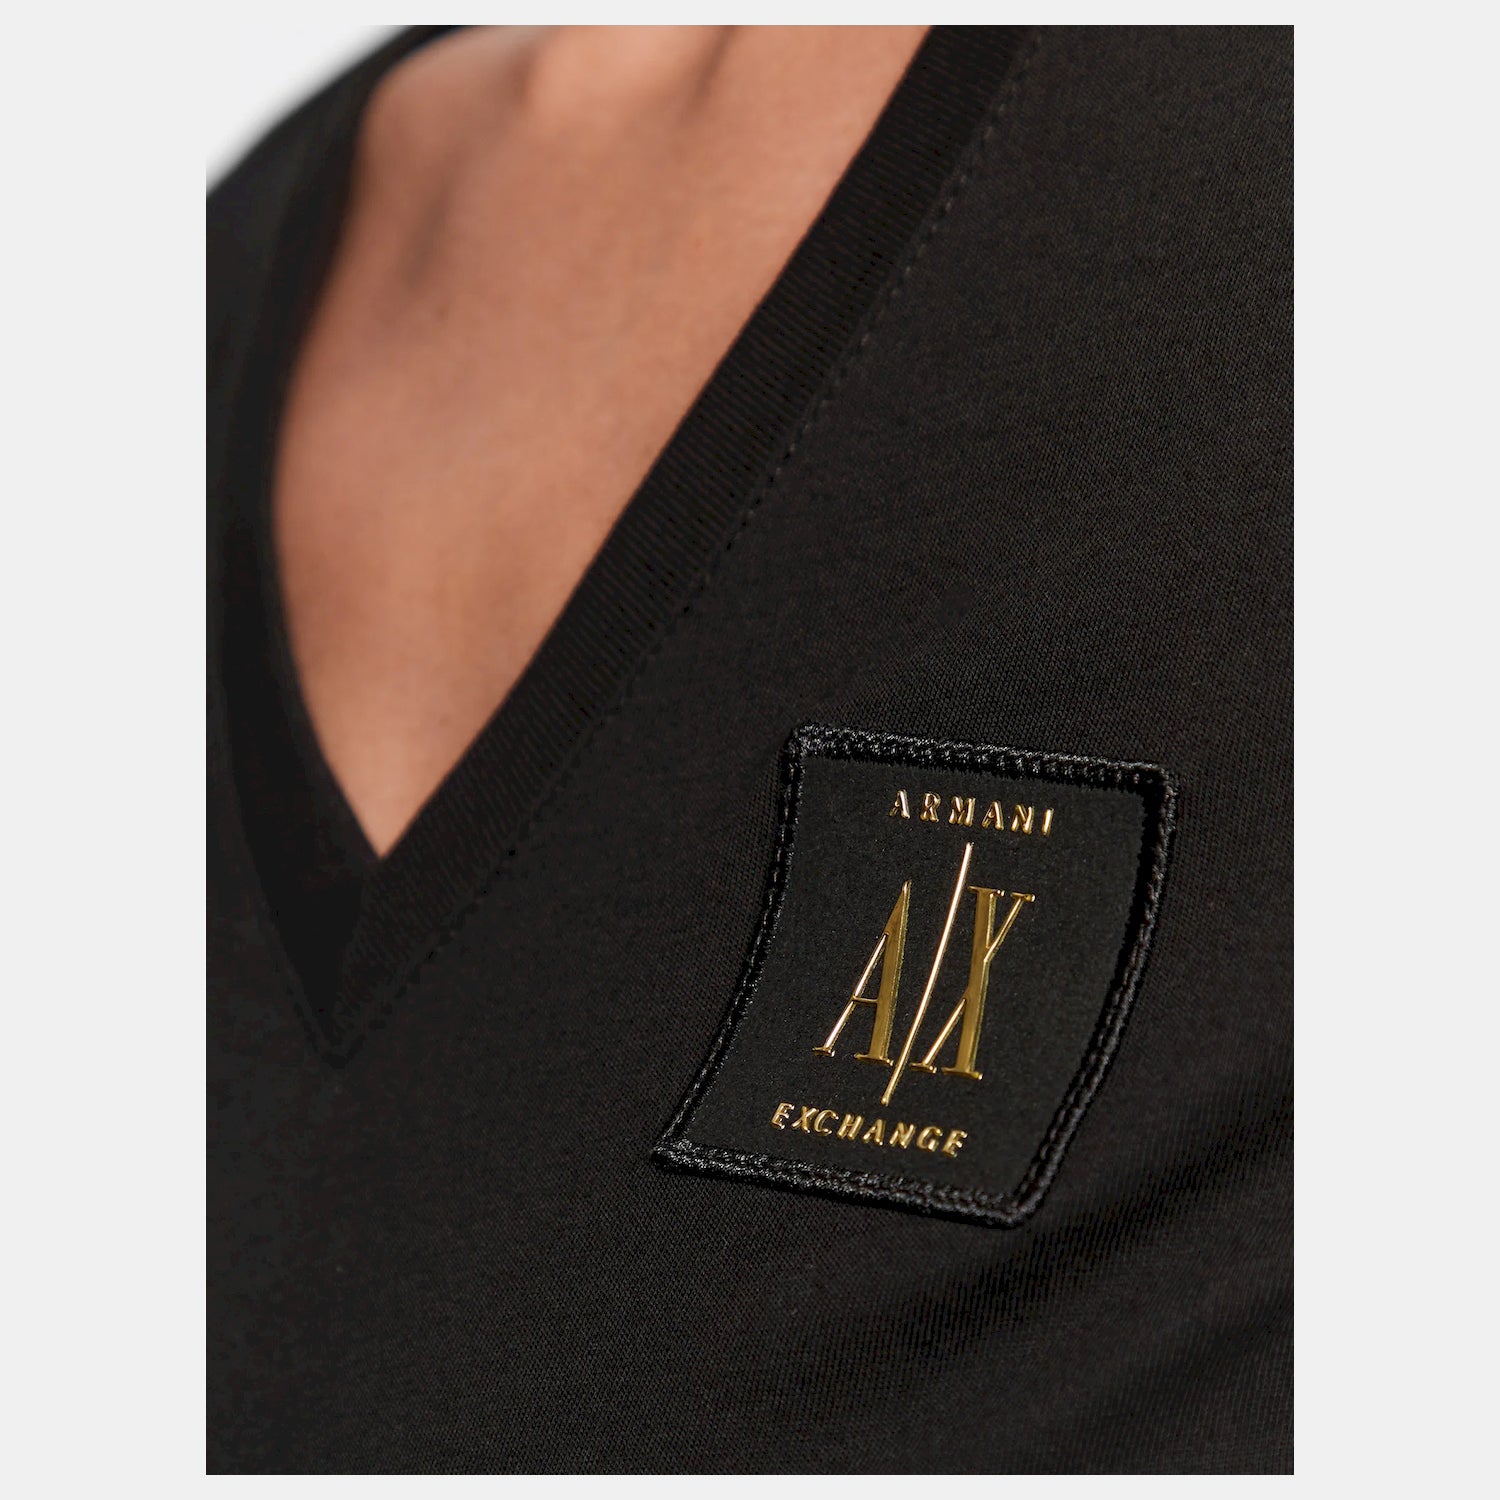 Armani Exchange T Shirt 8nytnx Yjg3z Blk Gold Preto Ouro_shot1